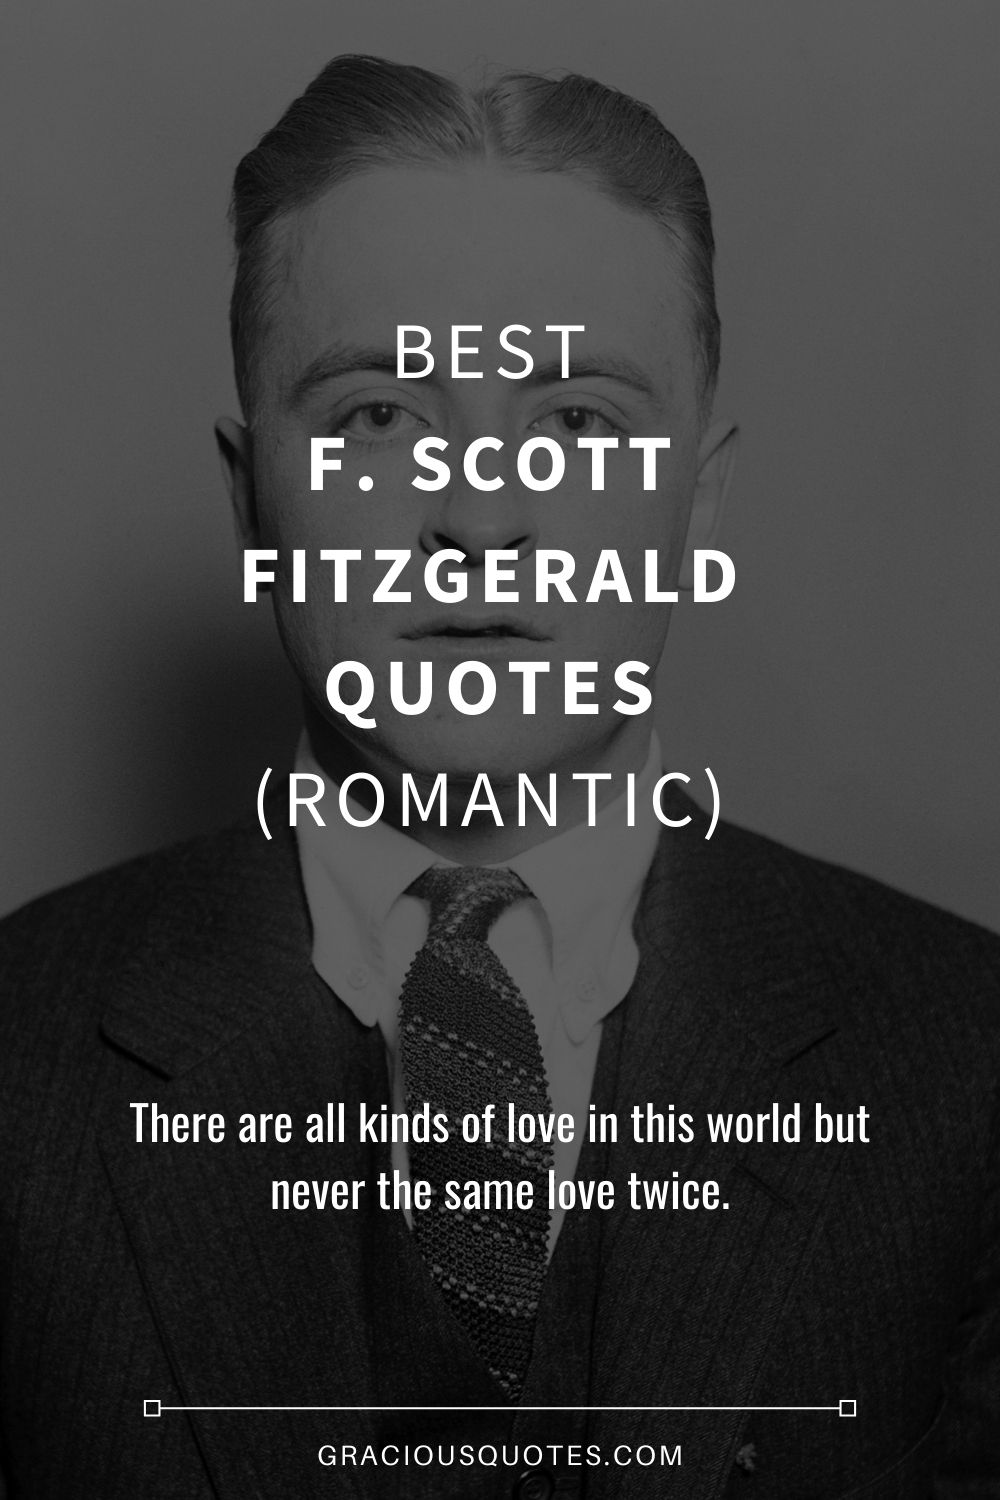 Best F. Scott Fitzgerald Quotes (ROMANTIC) - Gracious Quotes